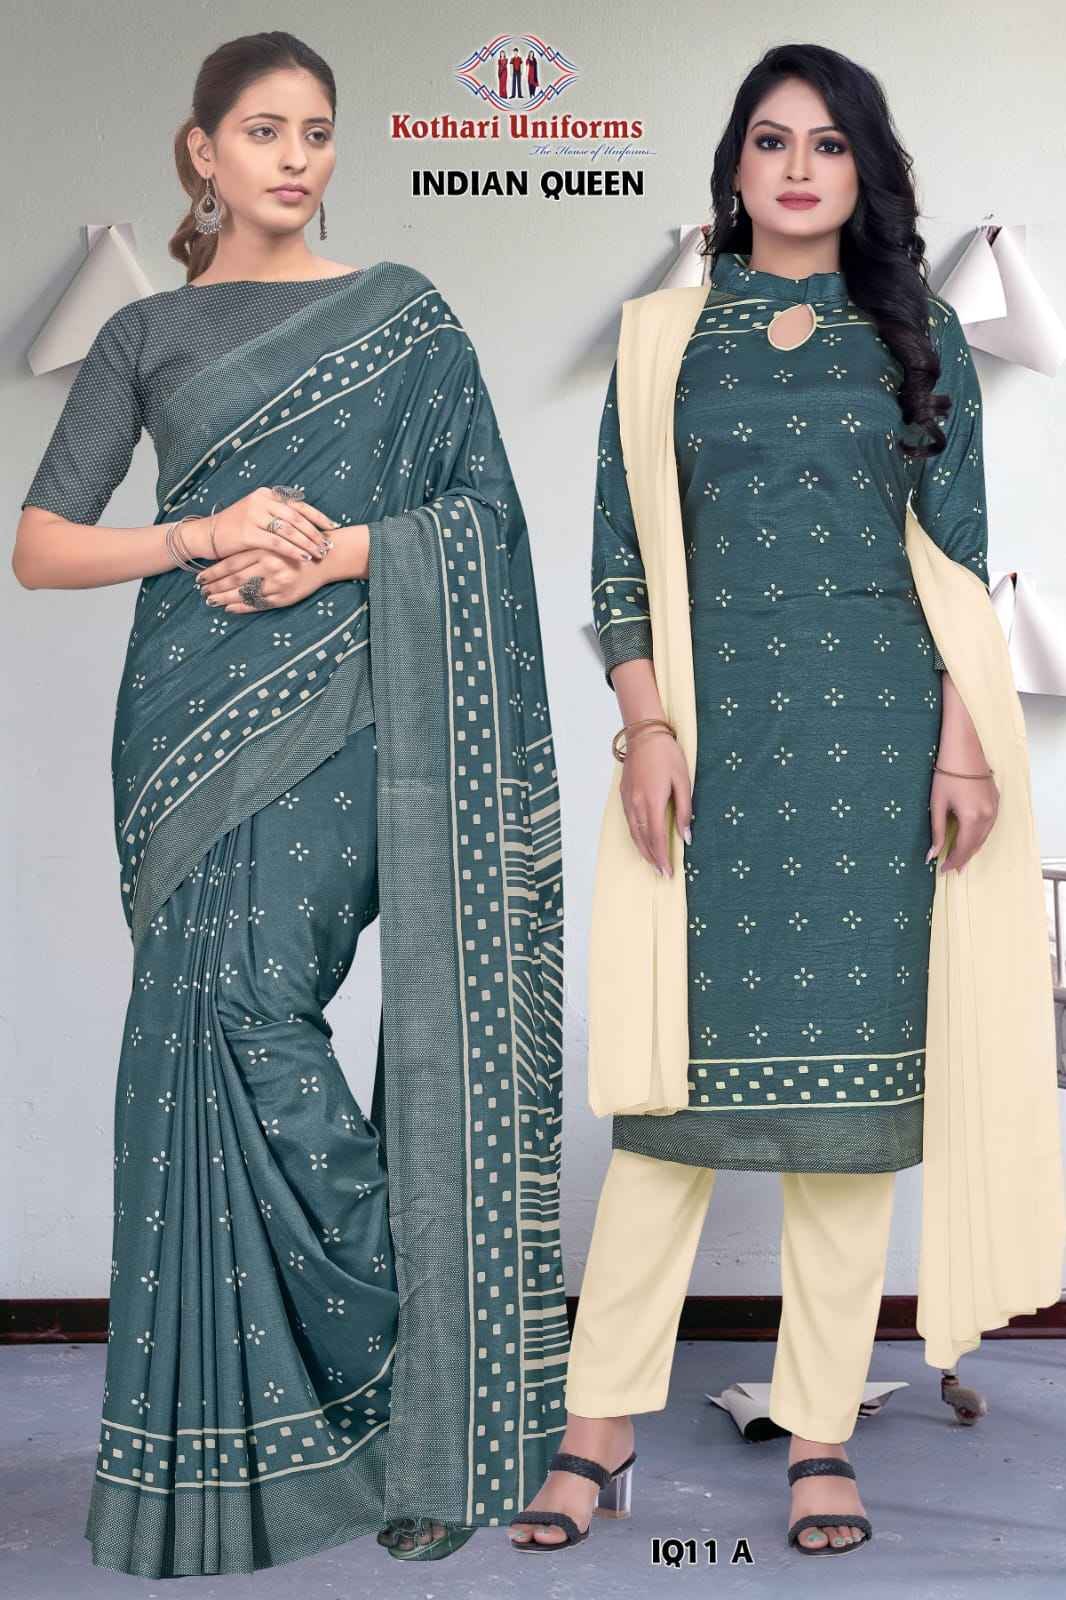  Blue Green Indian Queen - IQ11 A & CIQ11 A Women's Premium  Silk small Printed Industrial Uniform Saree Salwar Combo